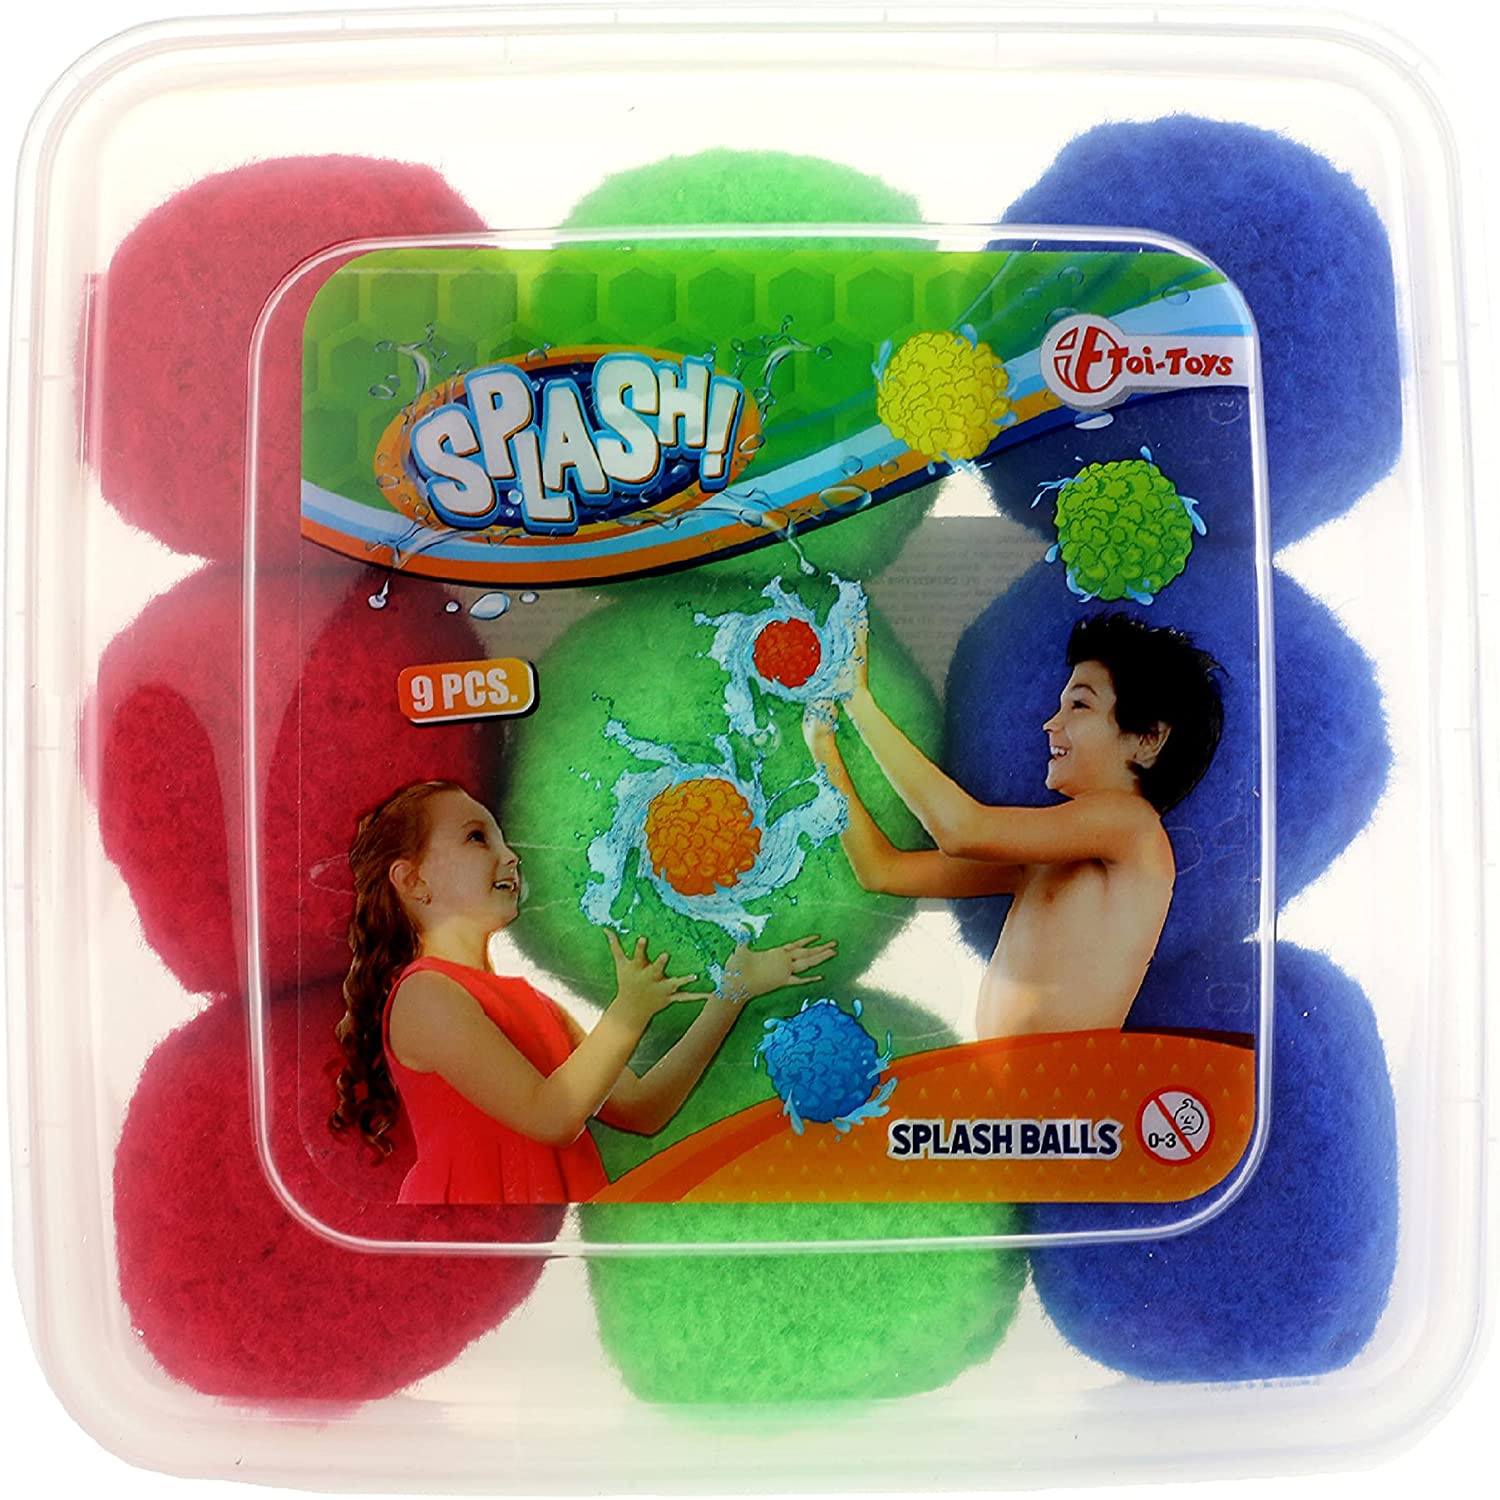 TOI-TOYS SPLASH Super Splashbälle 7cm Wasserspielzeug (9 Stück)